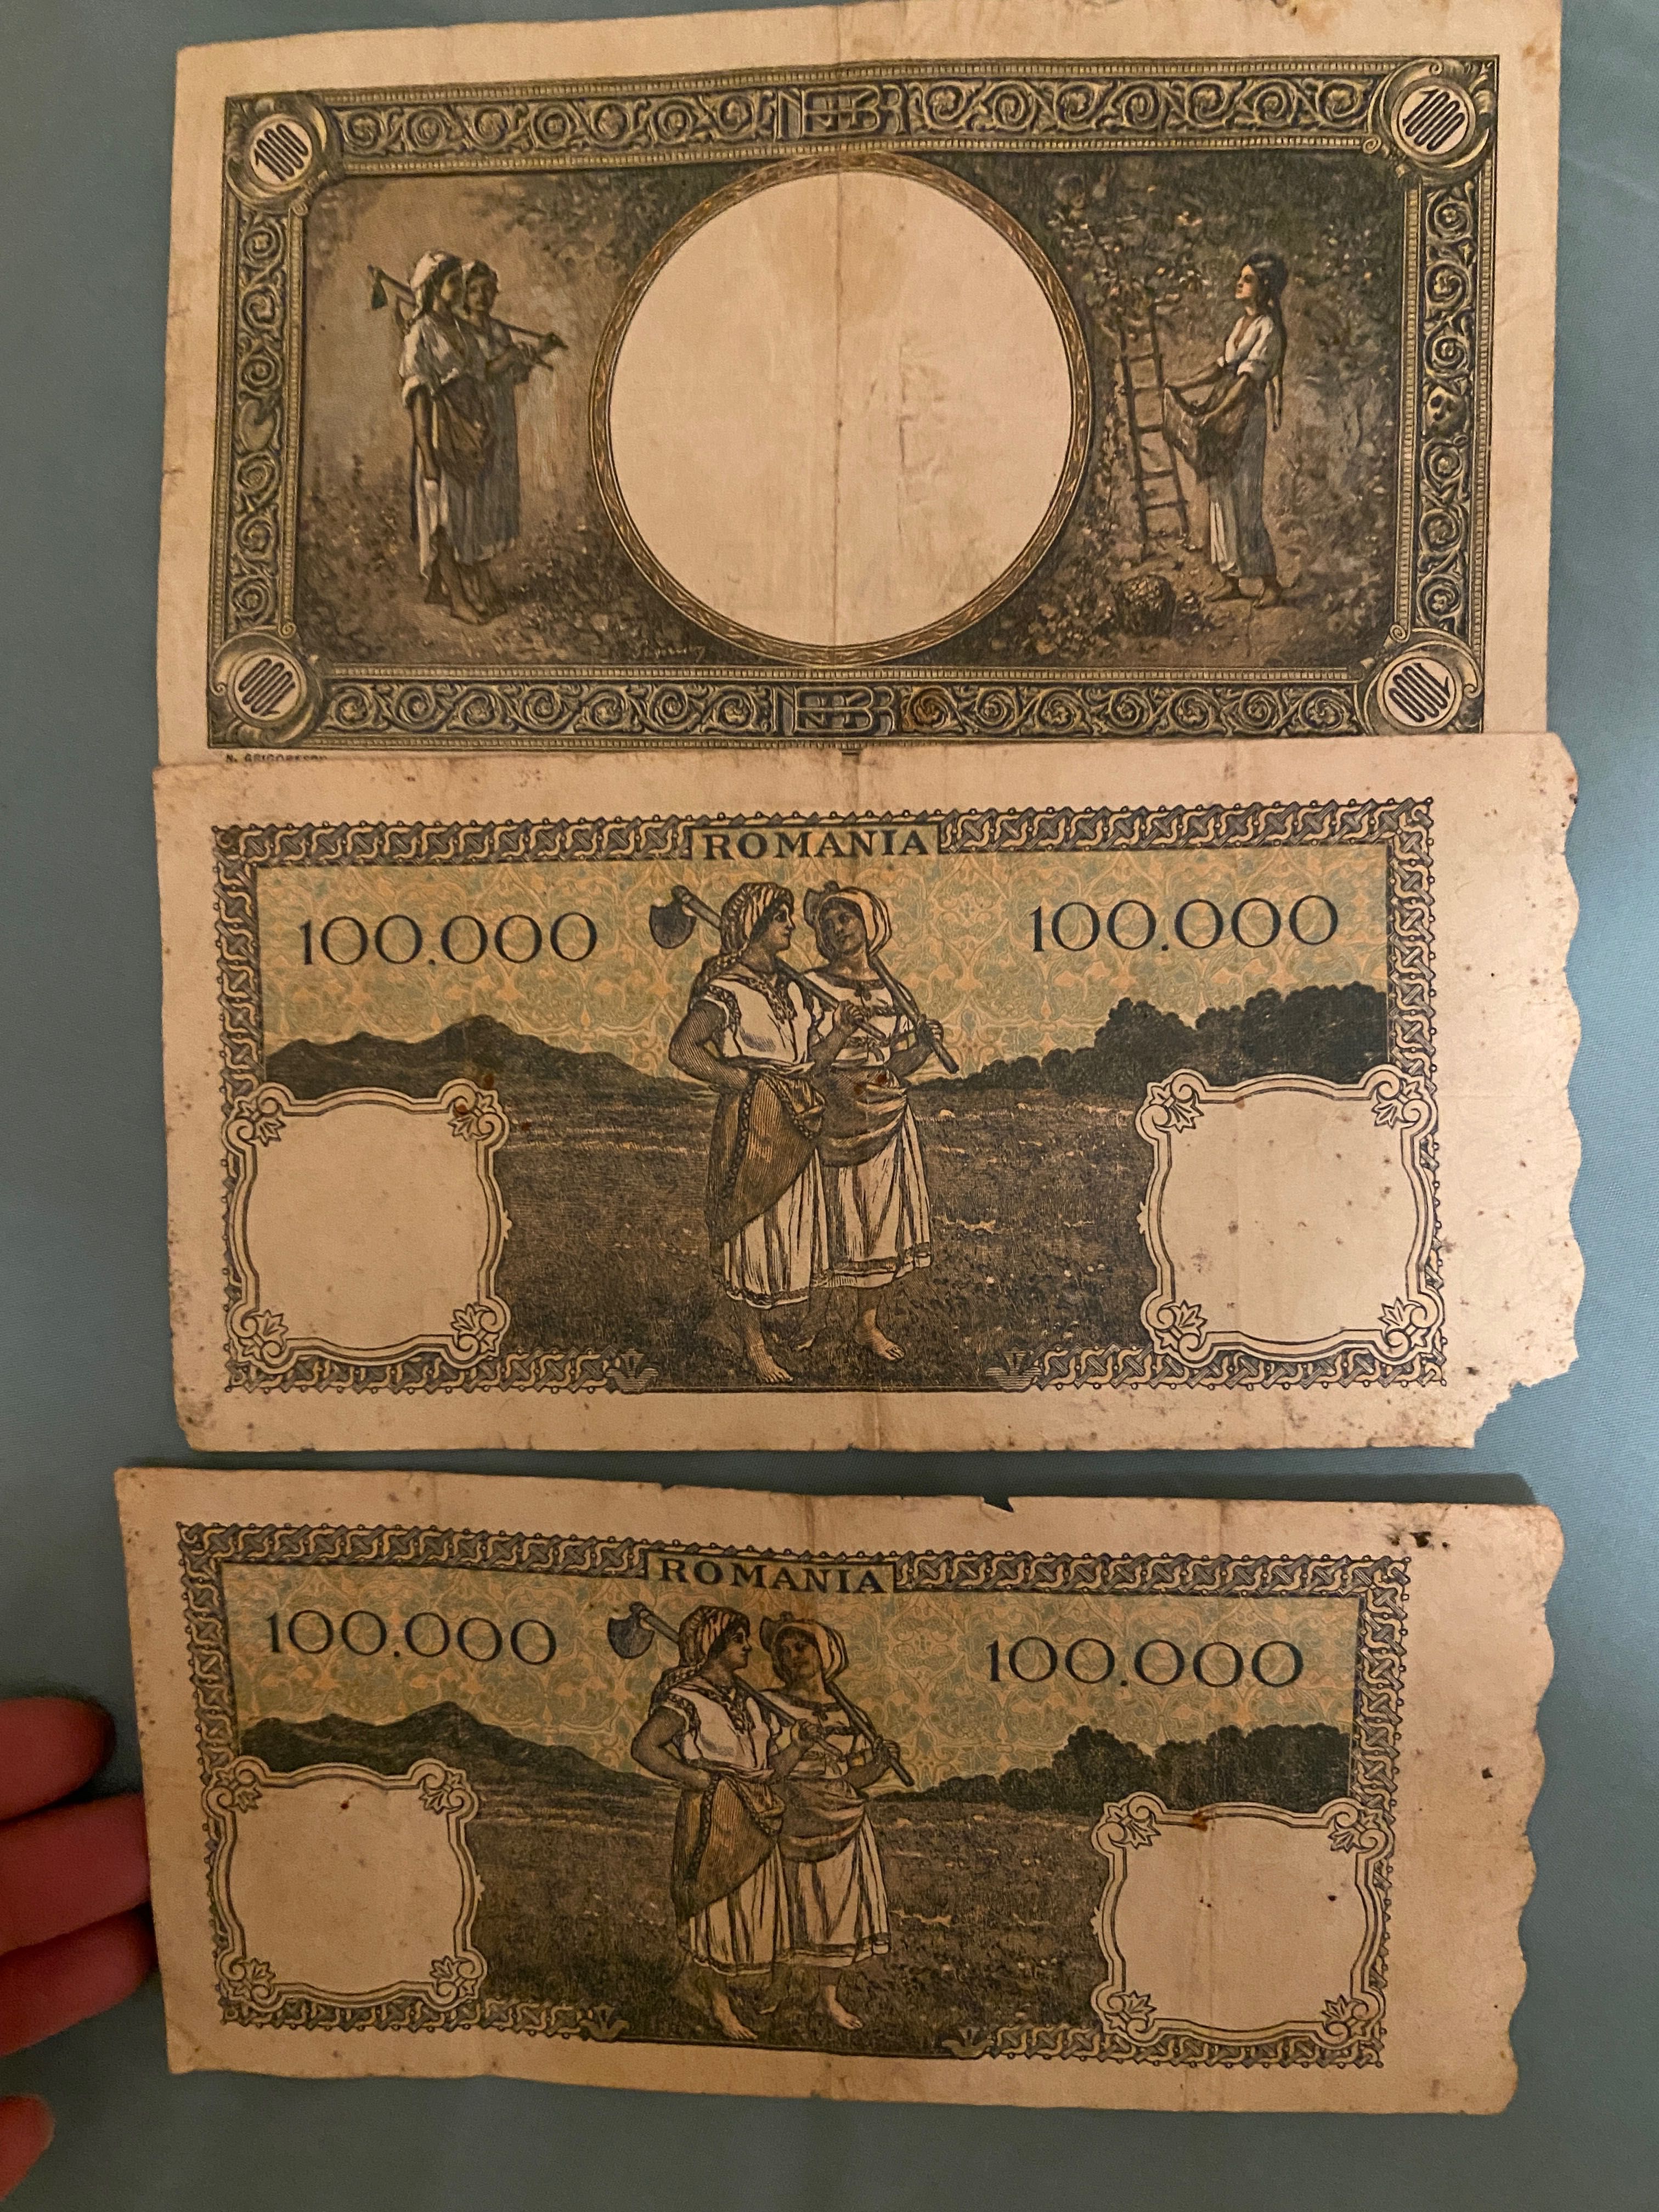 Bani vechi romanesti  si Drahme bancnote gresesti